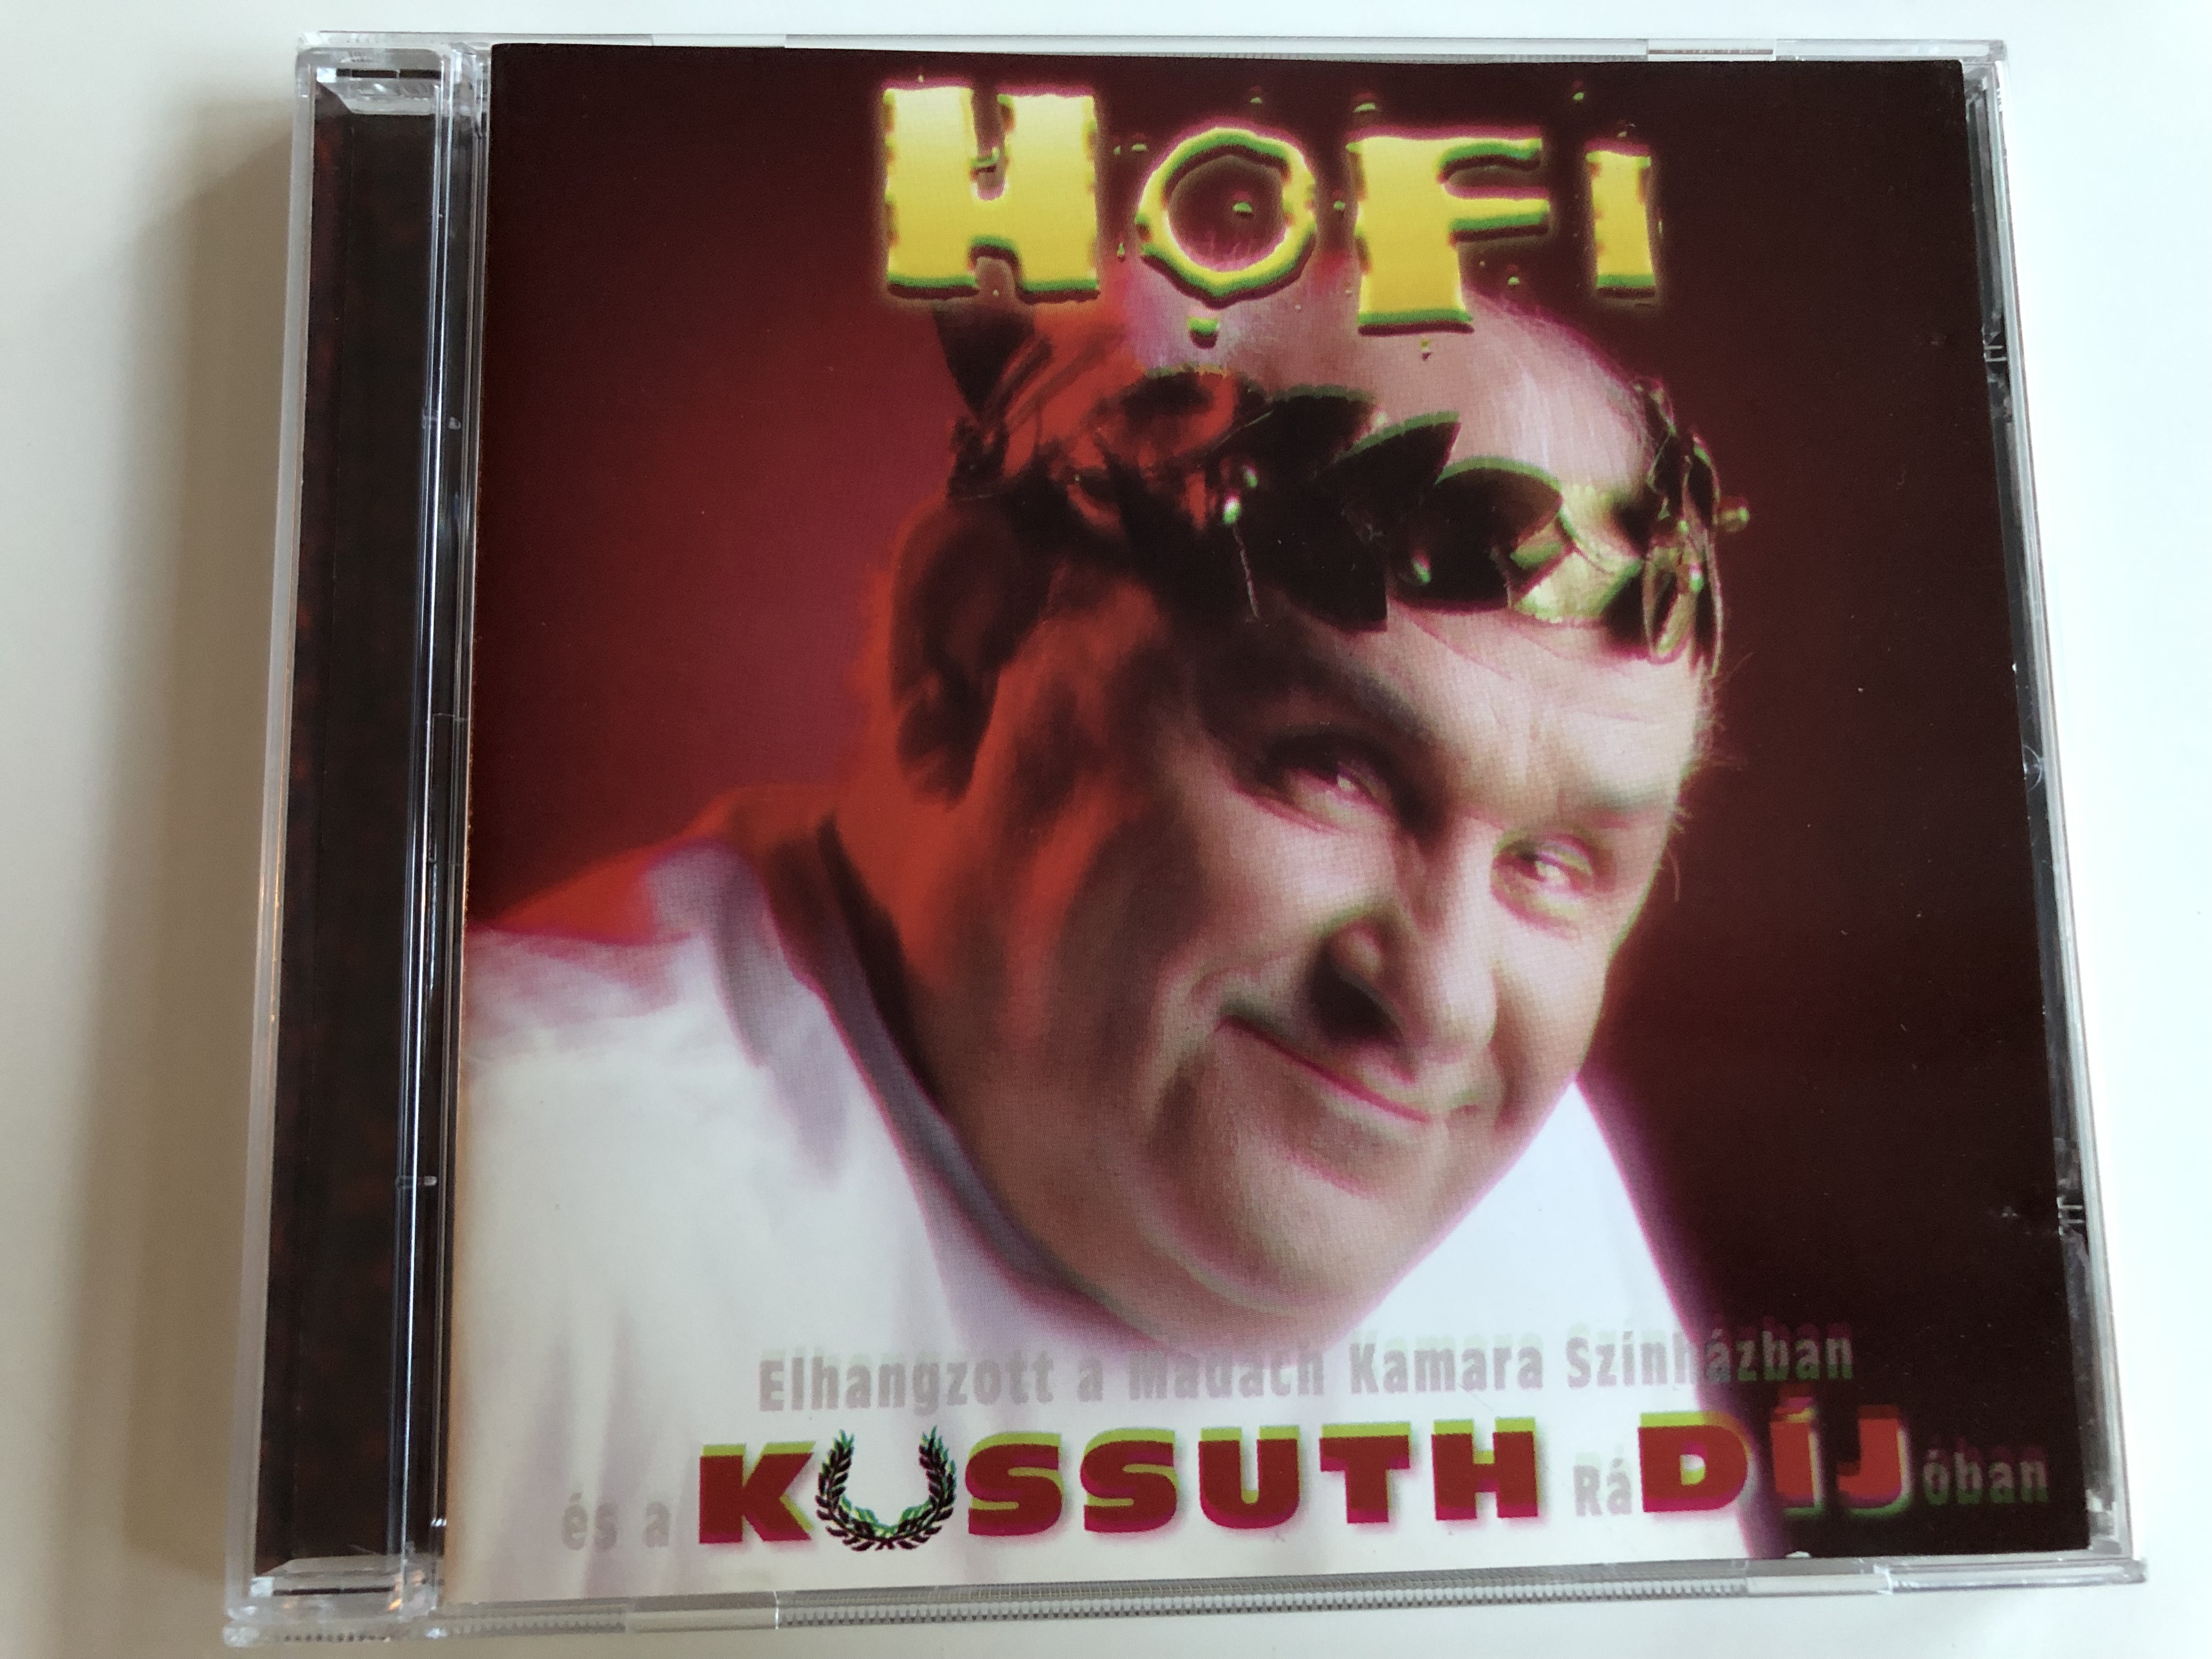 hofi-kossuth-d-j-elhangzott-a-mad-ch-kamara-sz-nh-zban-s-a-kossuth-r-di-ban-audio-cd-1998-hungaroton-hcd-57900-1-.jpg